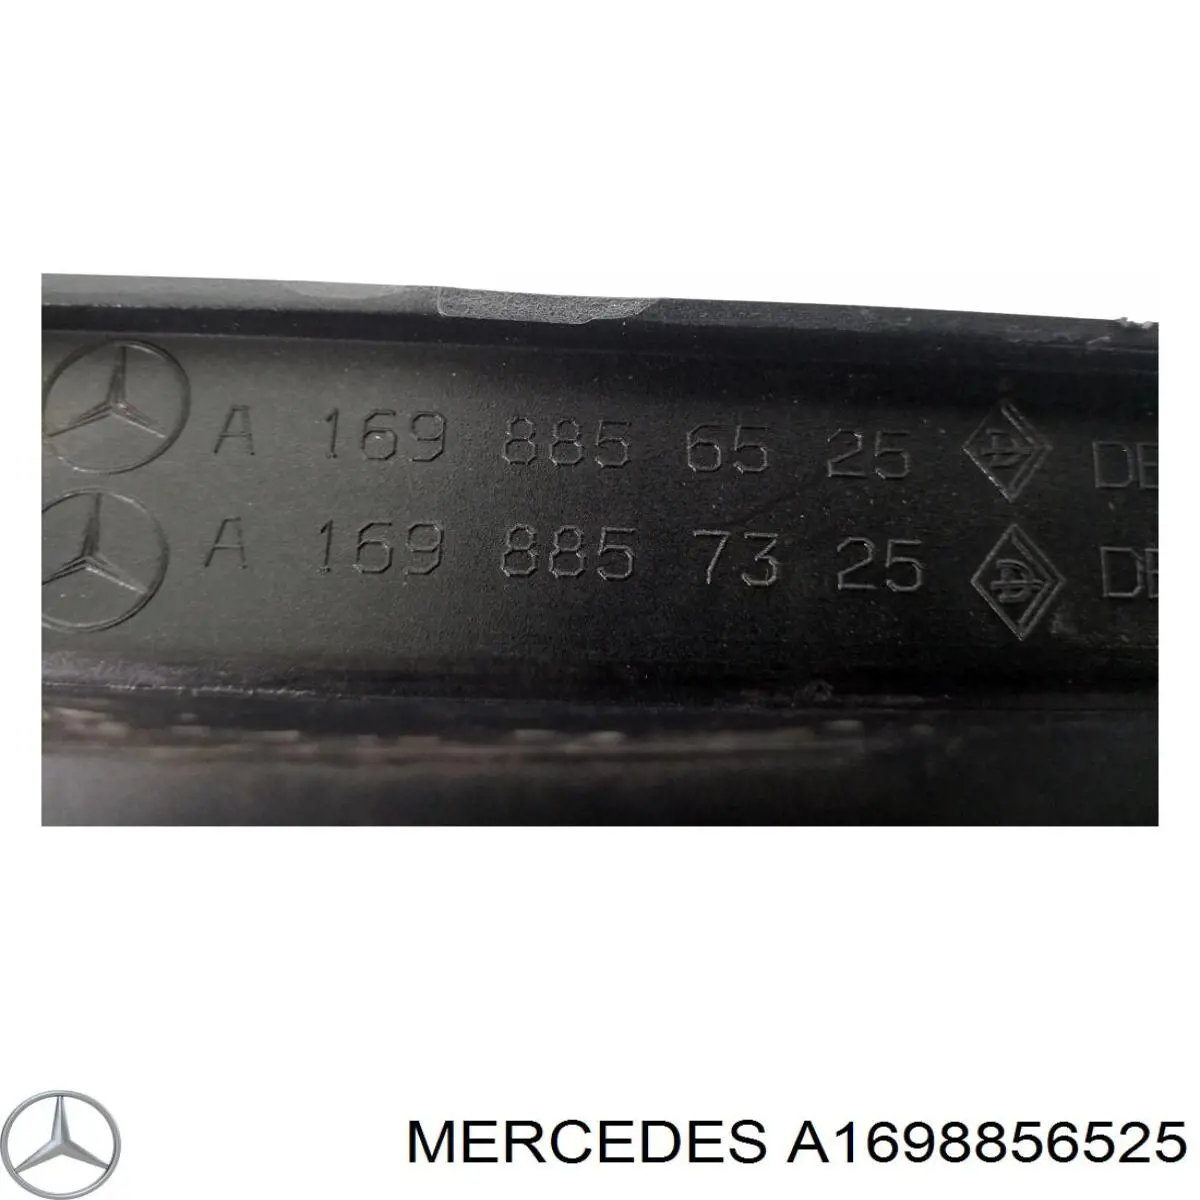 16988565259999 Mercedes бампер задний